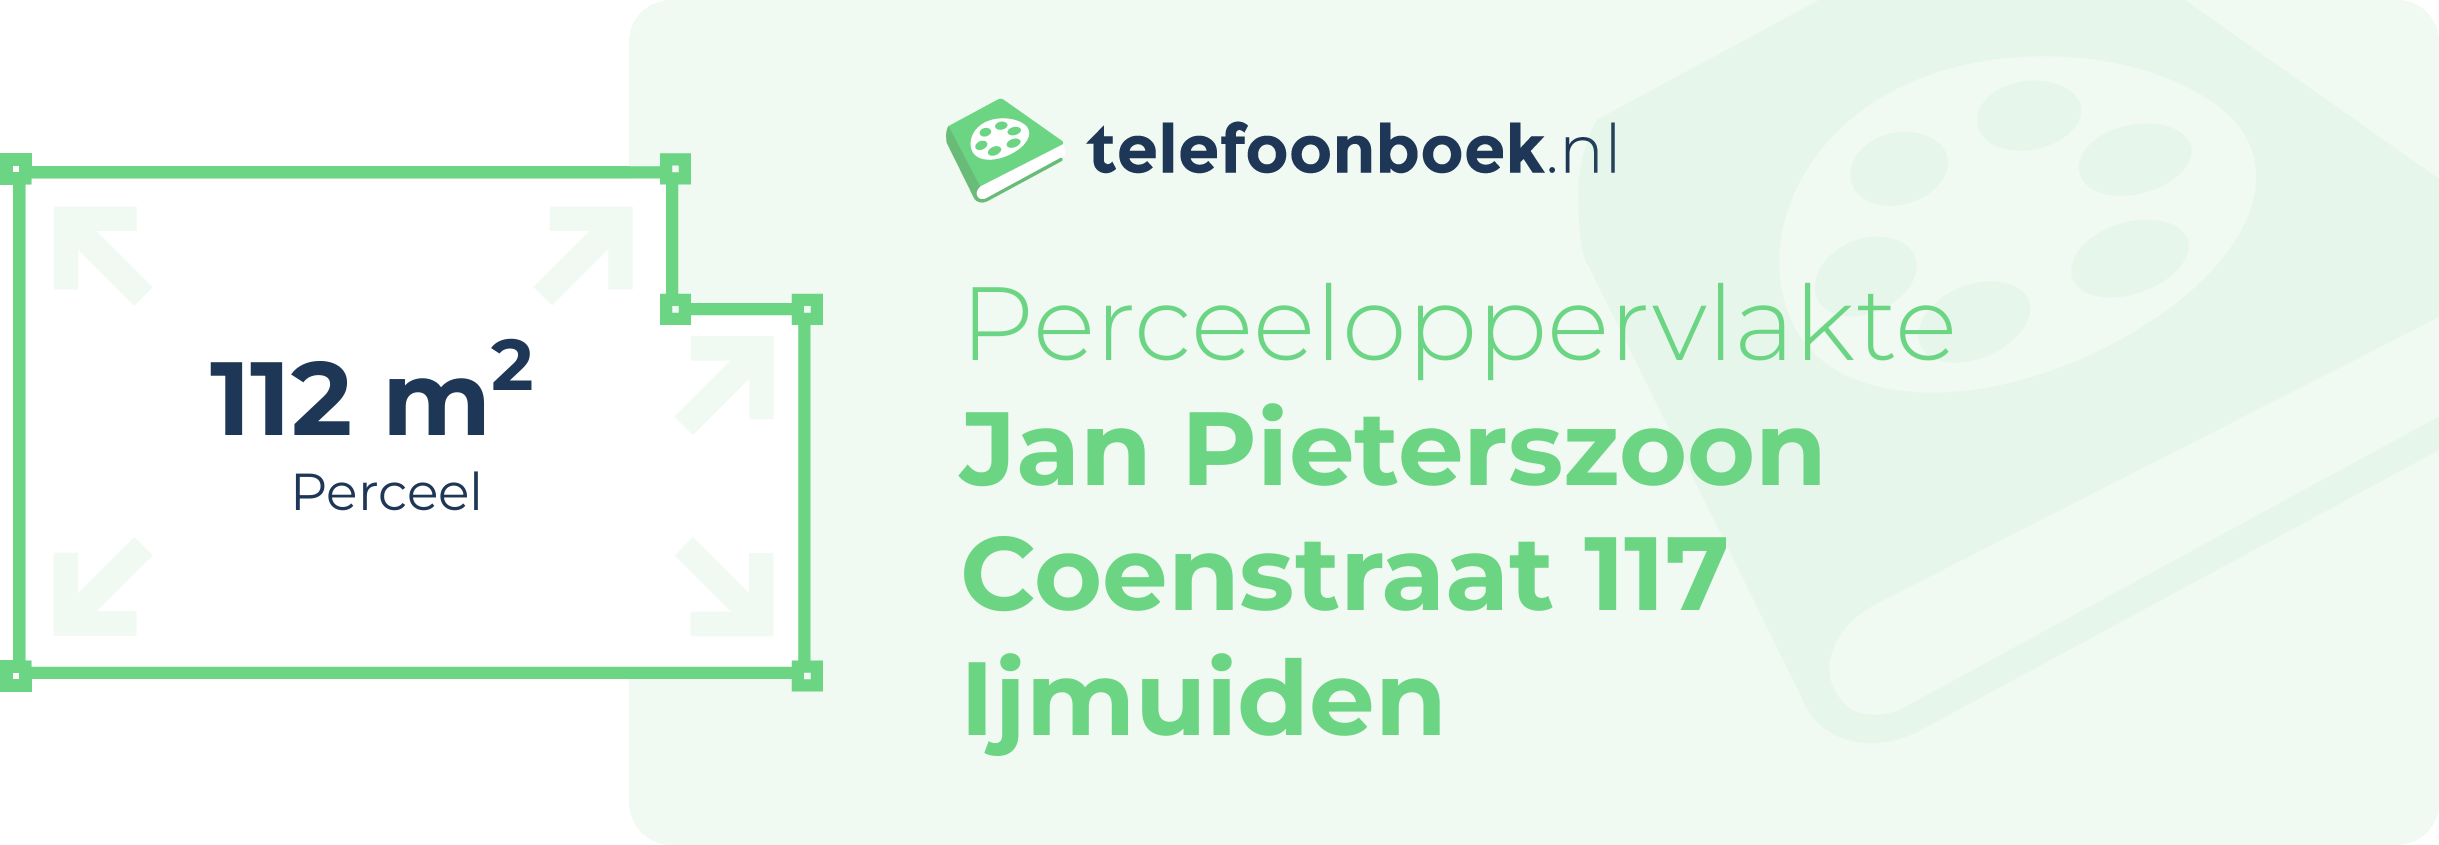 Perceeloppervlakte Jan Pieterszoon Coenstraat 117 Ijmuiden